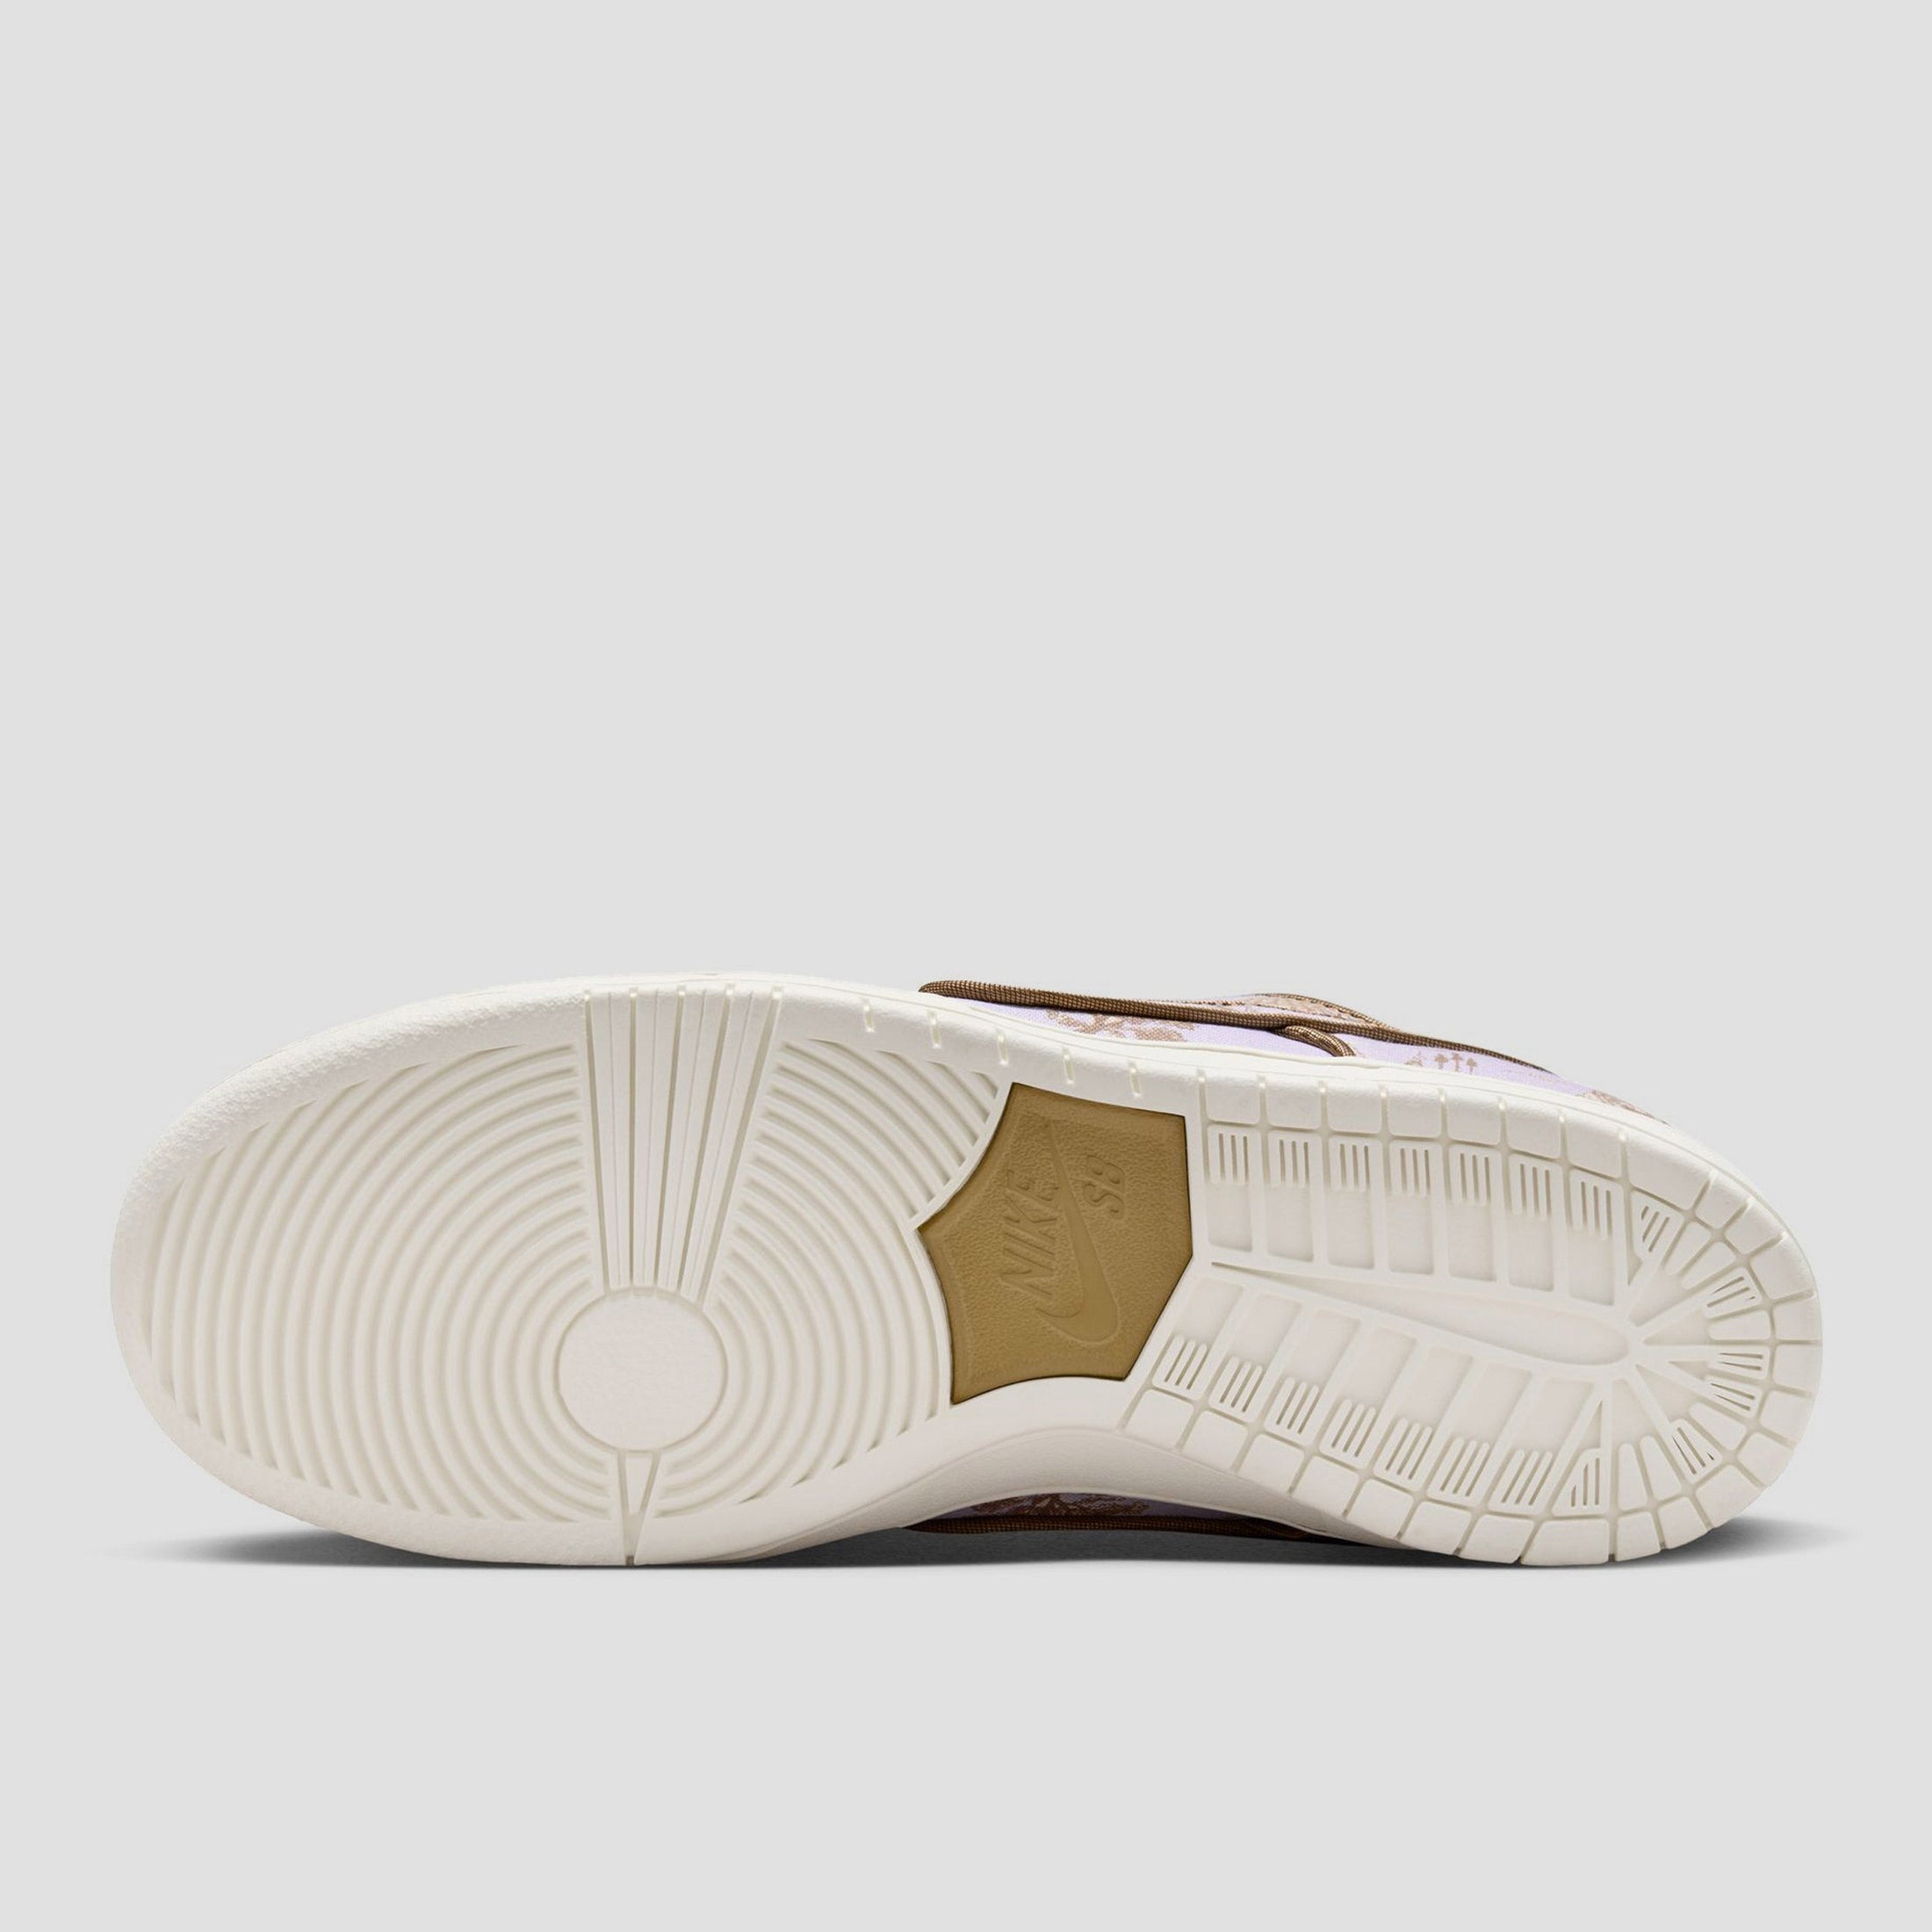 Nike SB Dunk Low Pro Premium Skate Shoes Football Grey / Coconut Milk - Khaki